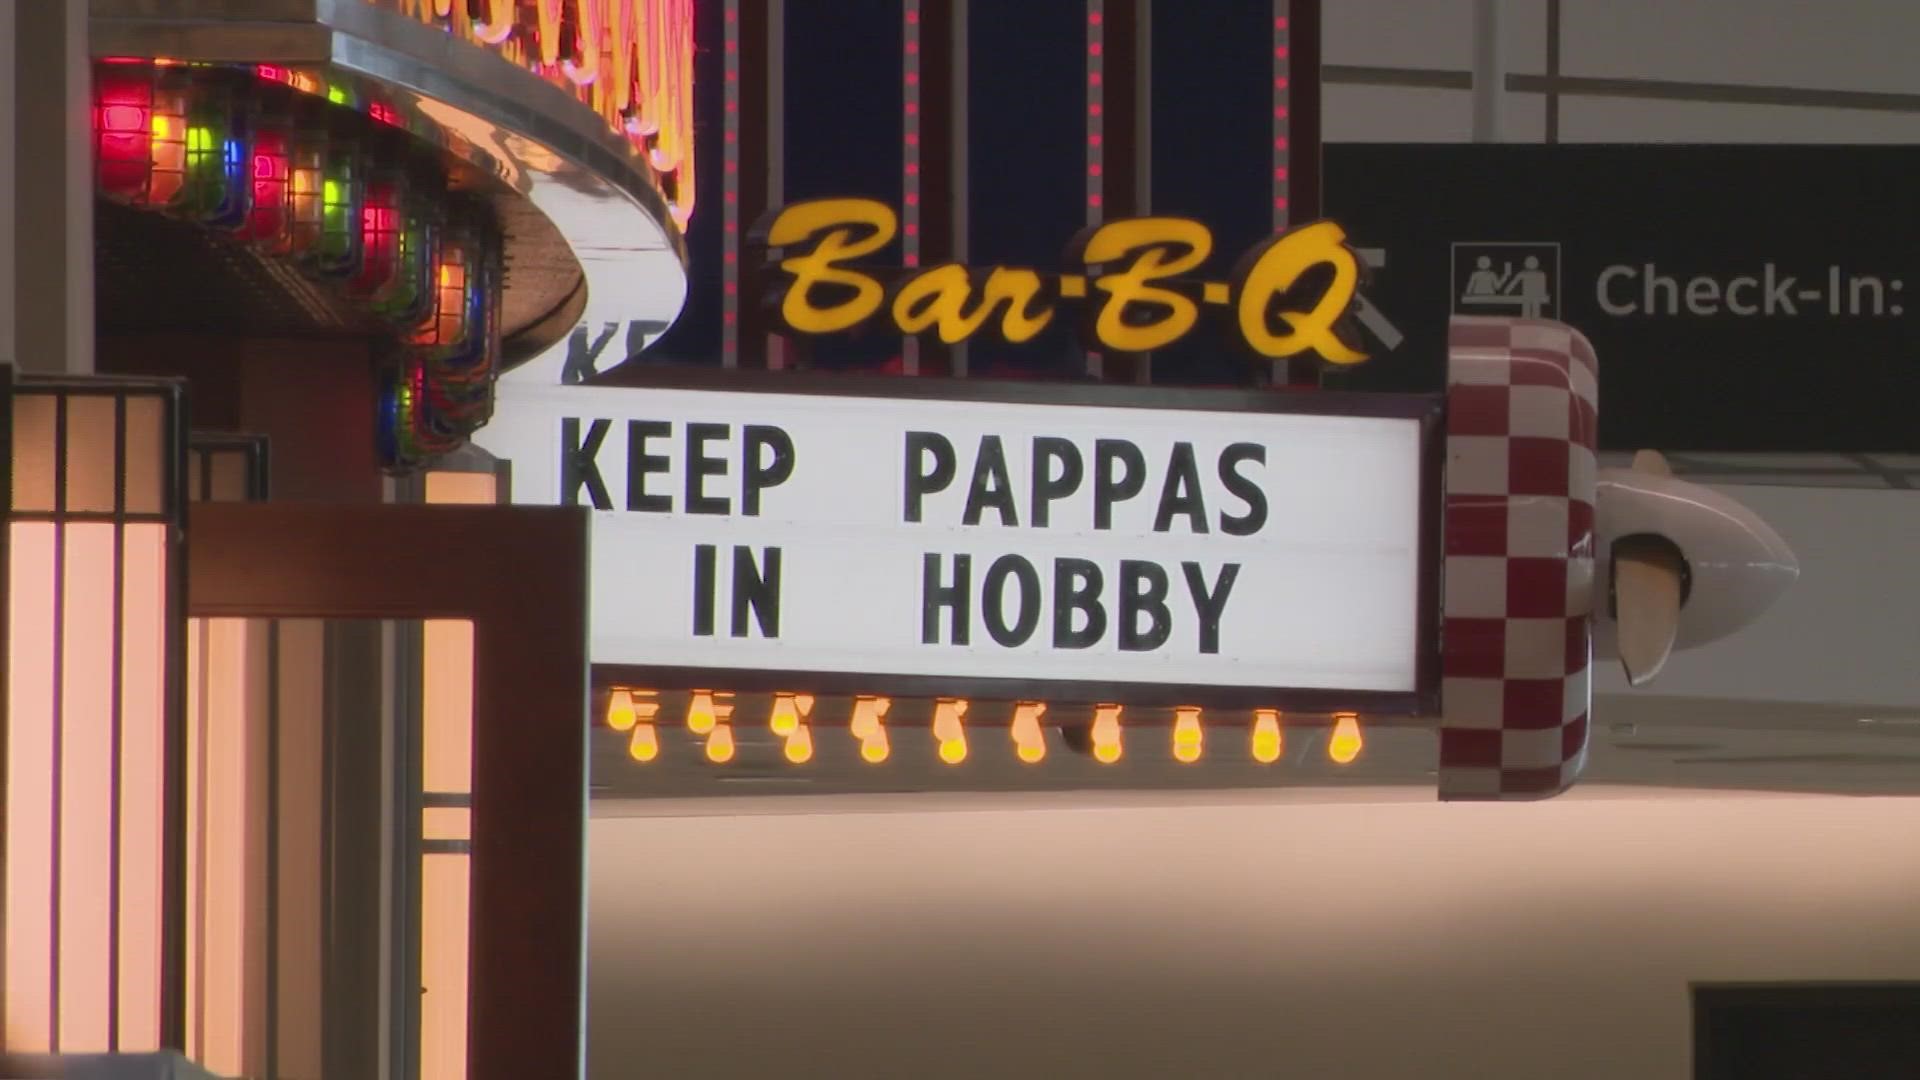 Pappas Bar-B-Q - Home